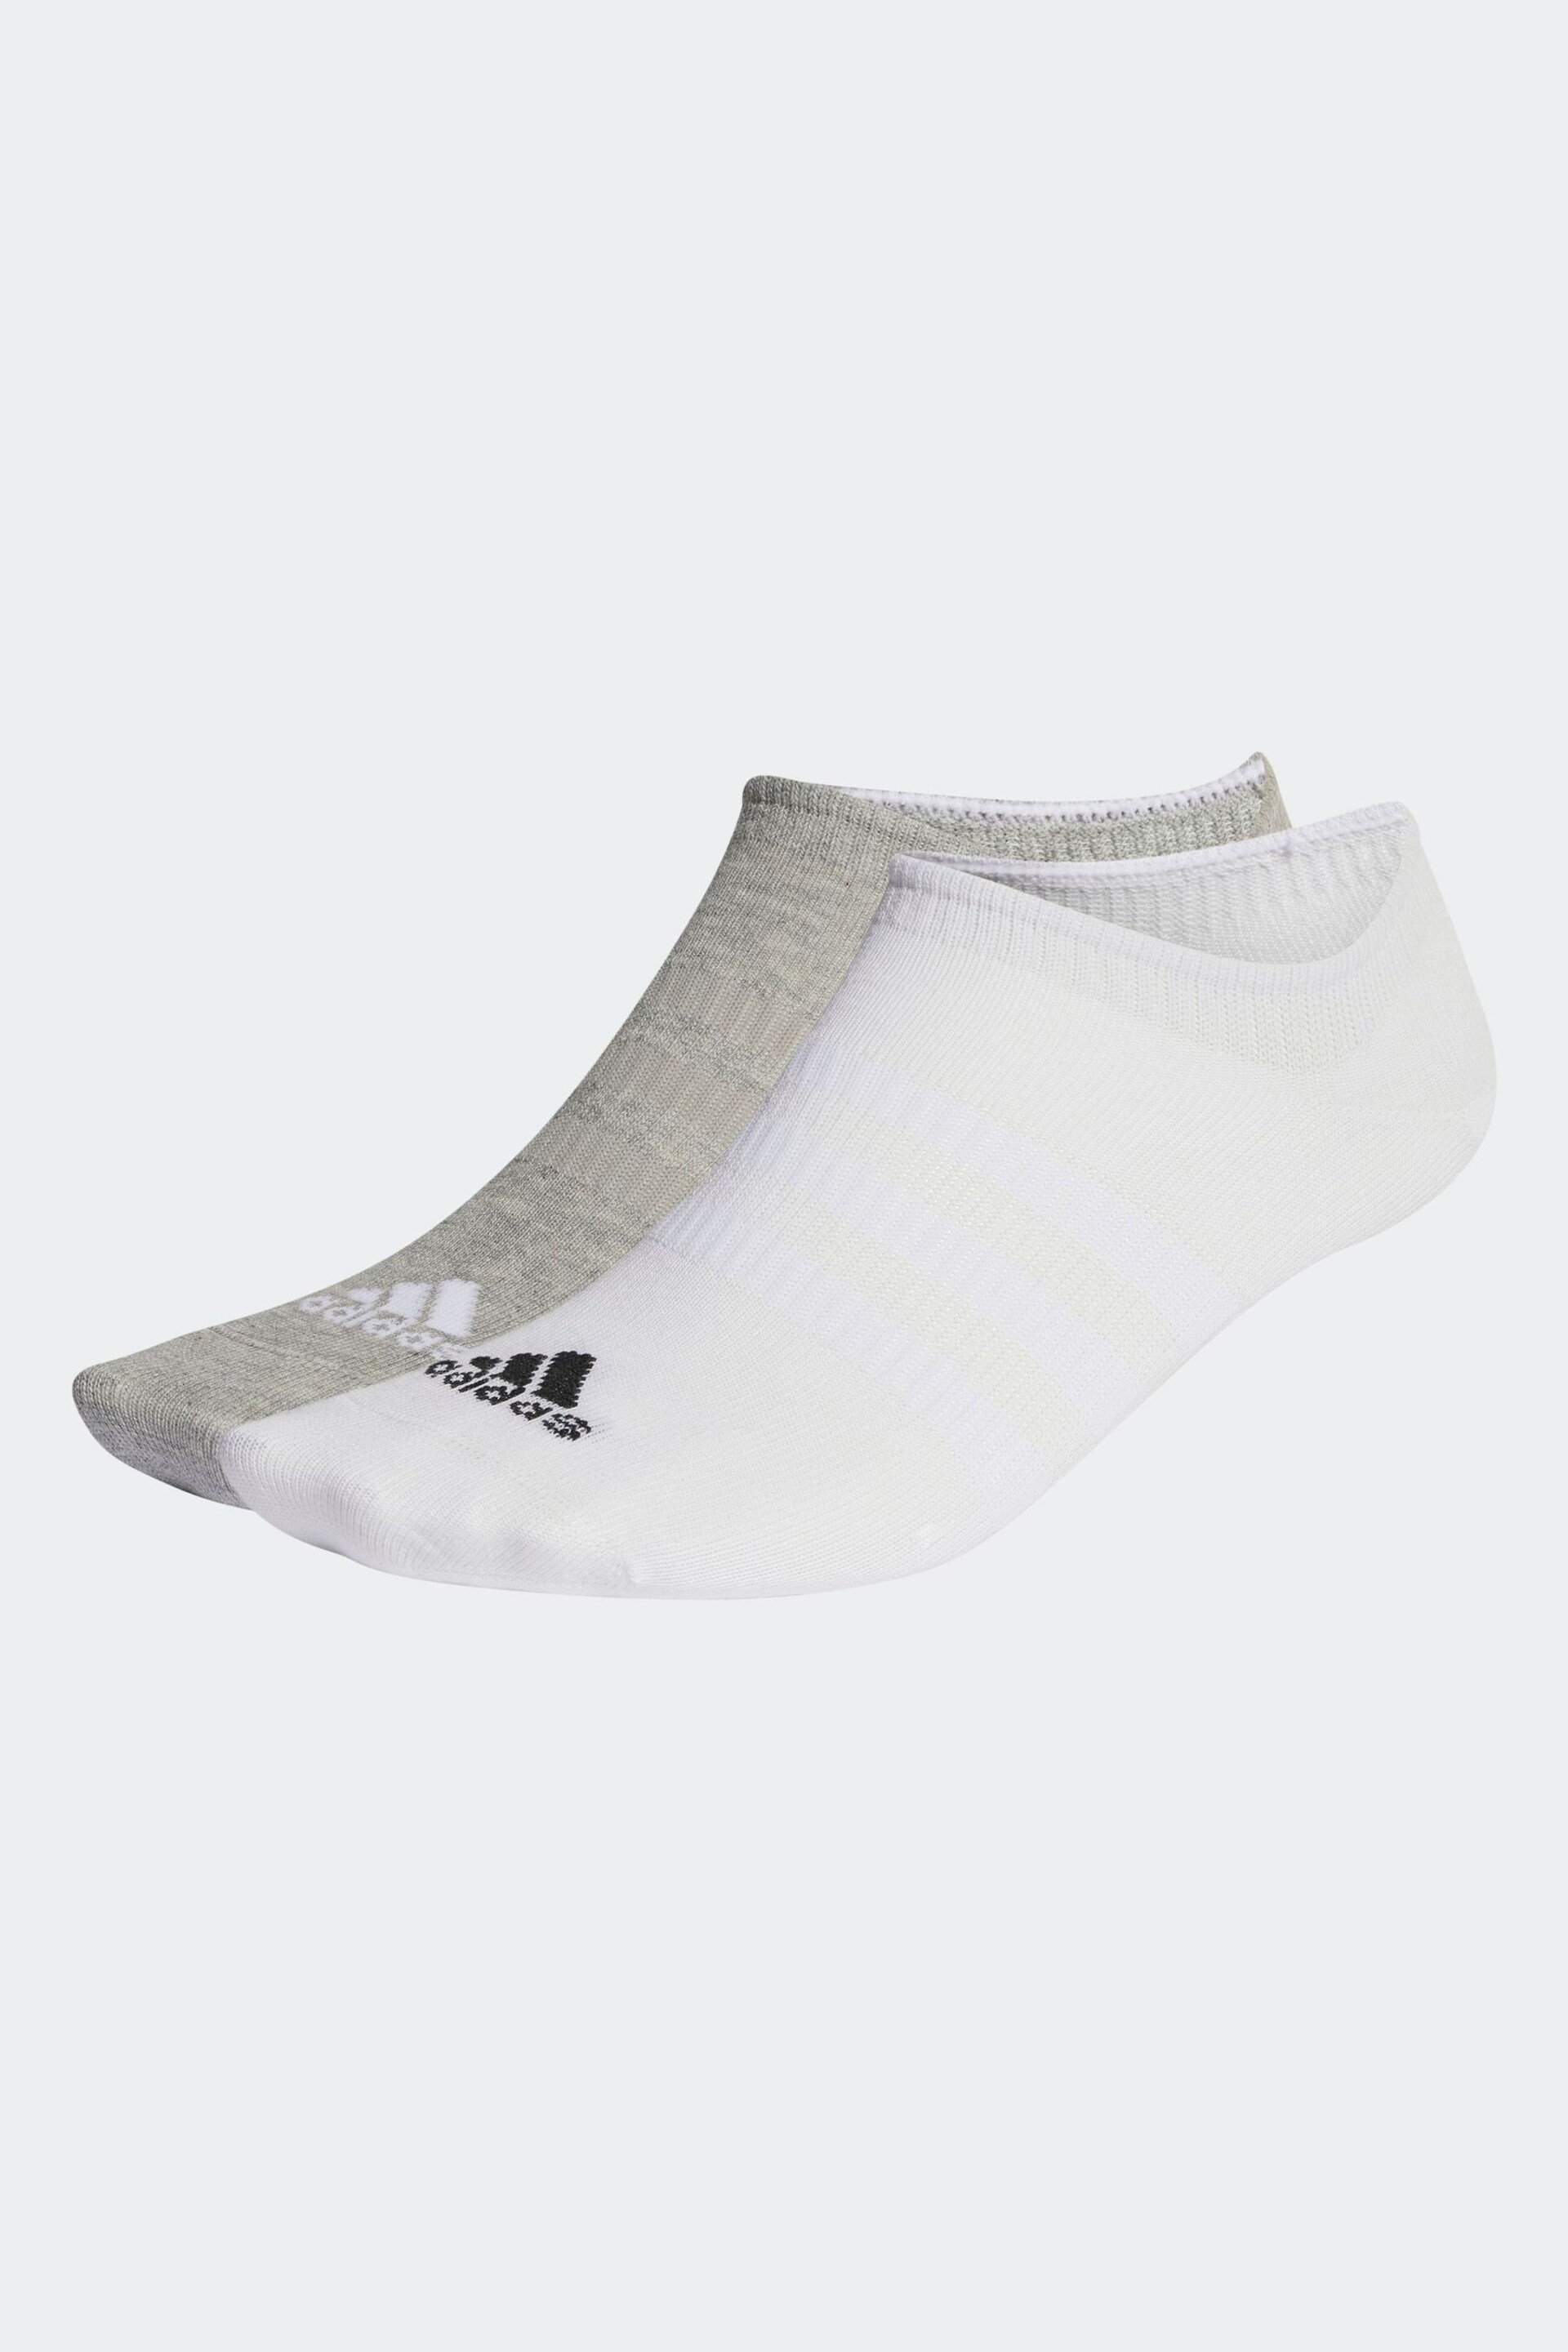 adidas Multi Thin And Light No-Show Socks 3 Pairs - Image 2 of 2